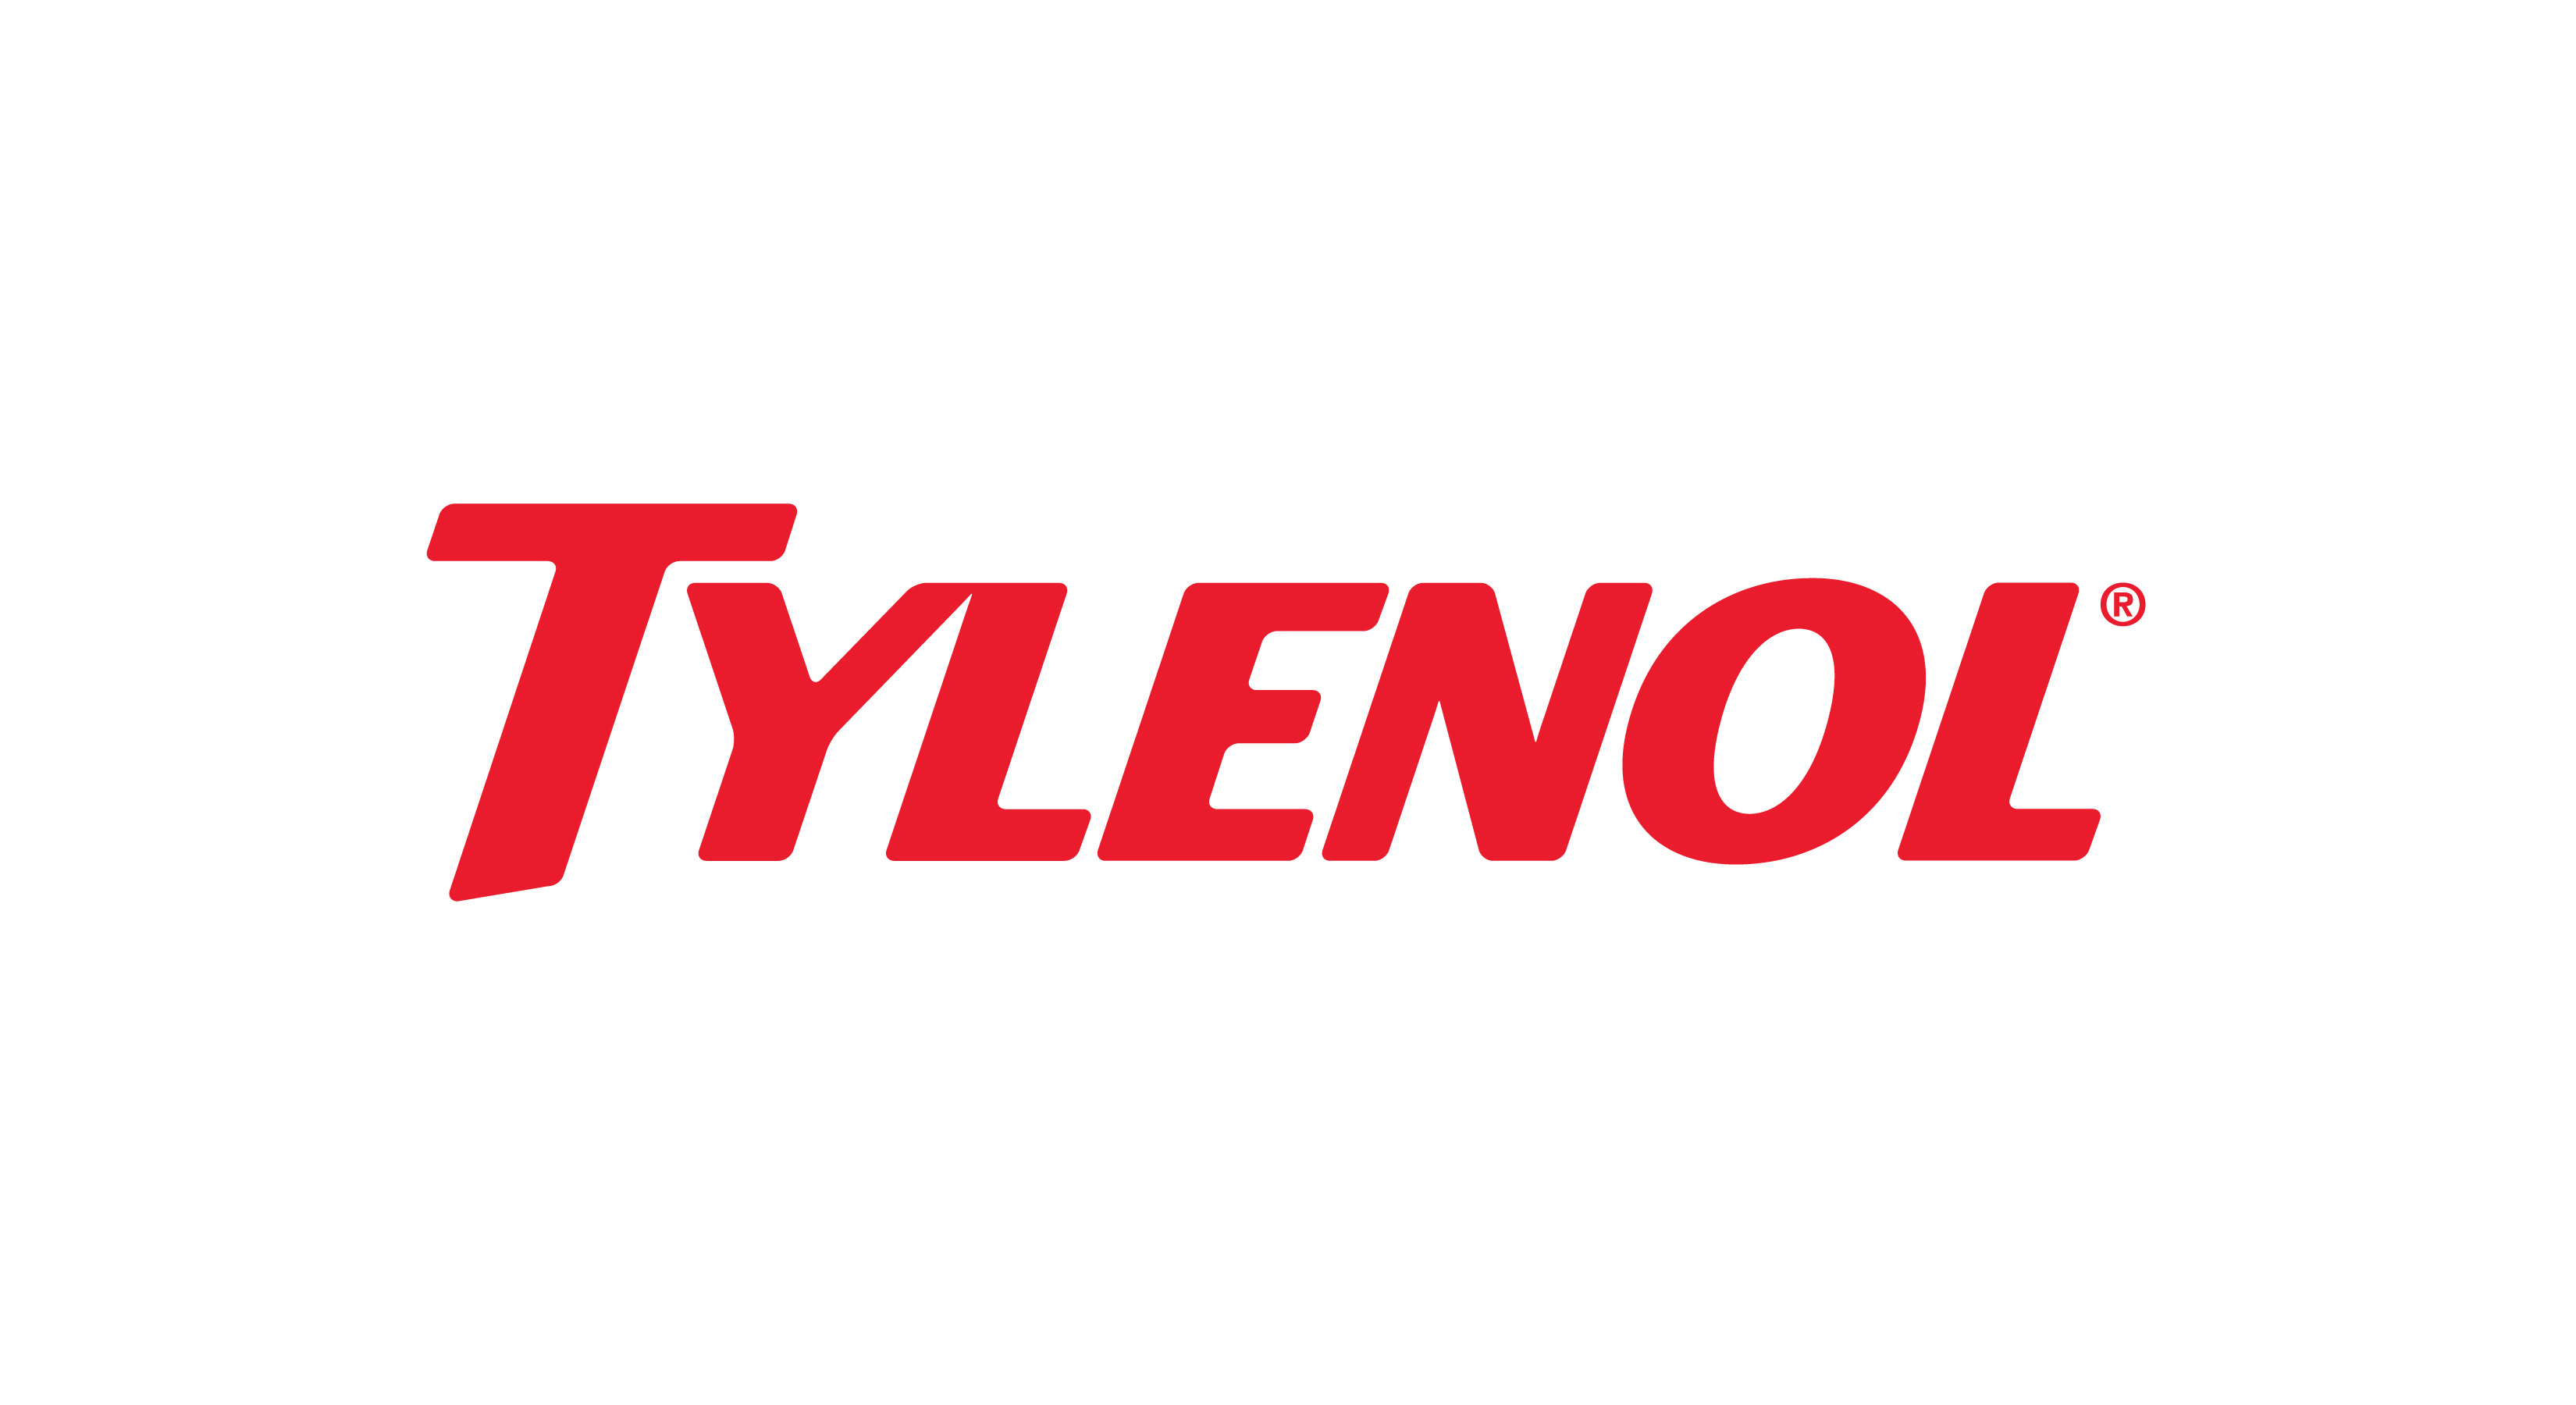 tylenol logo